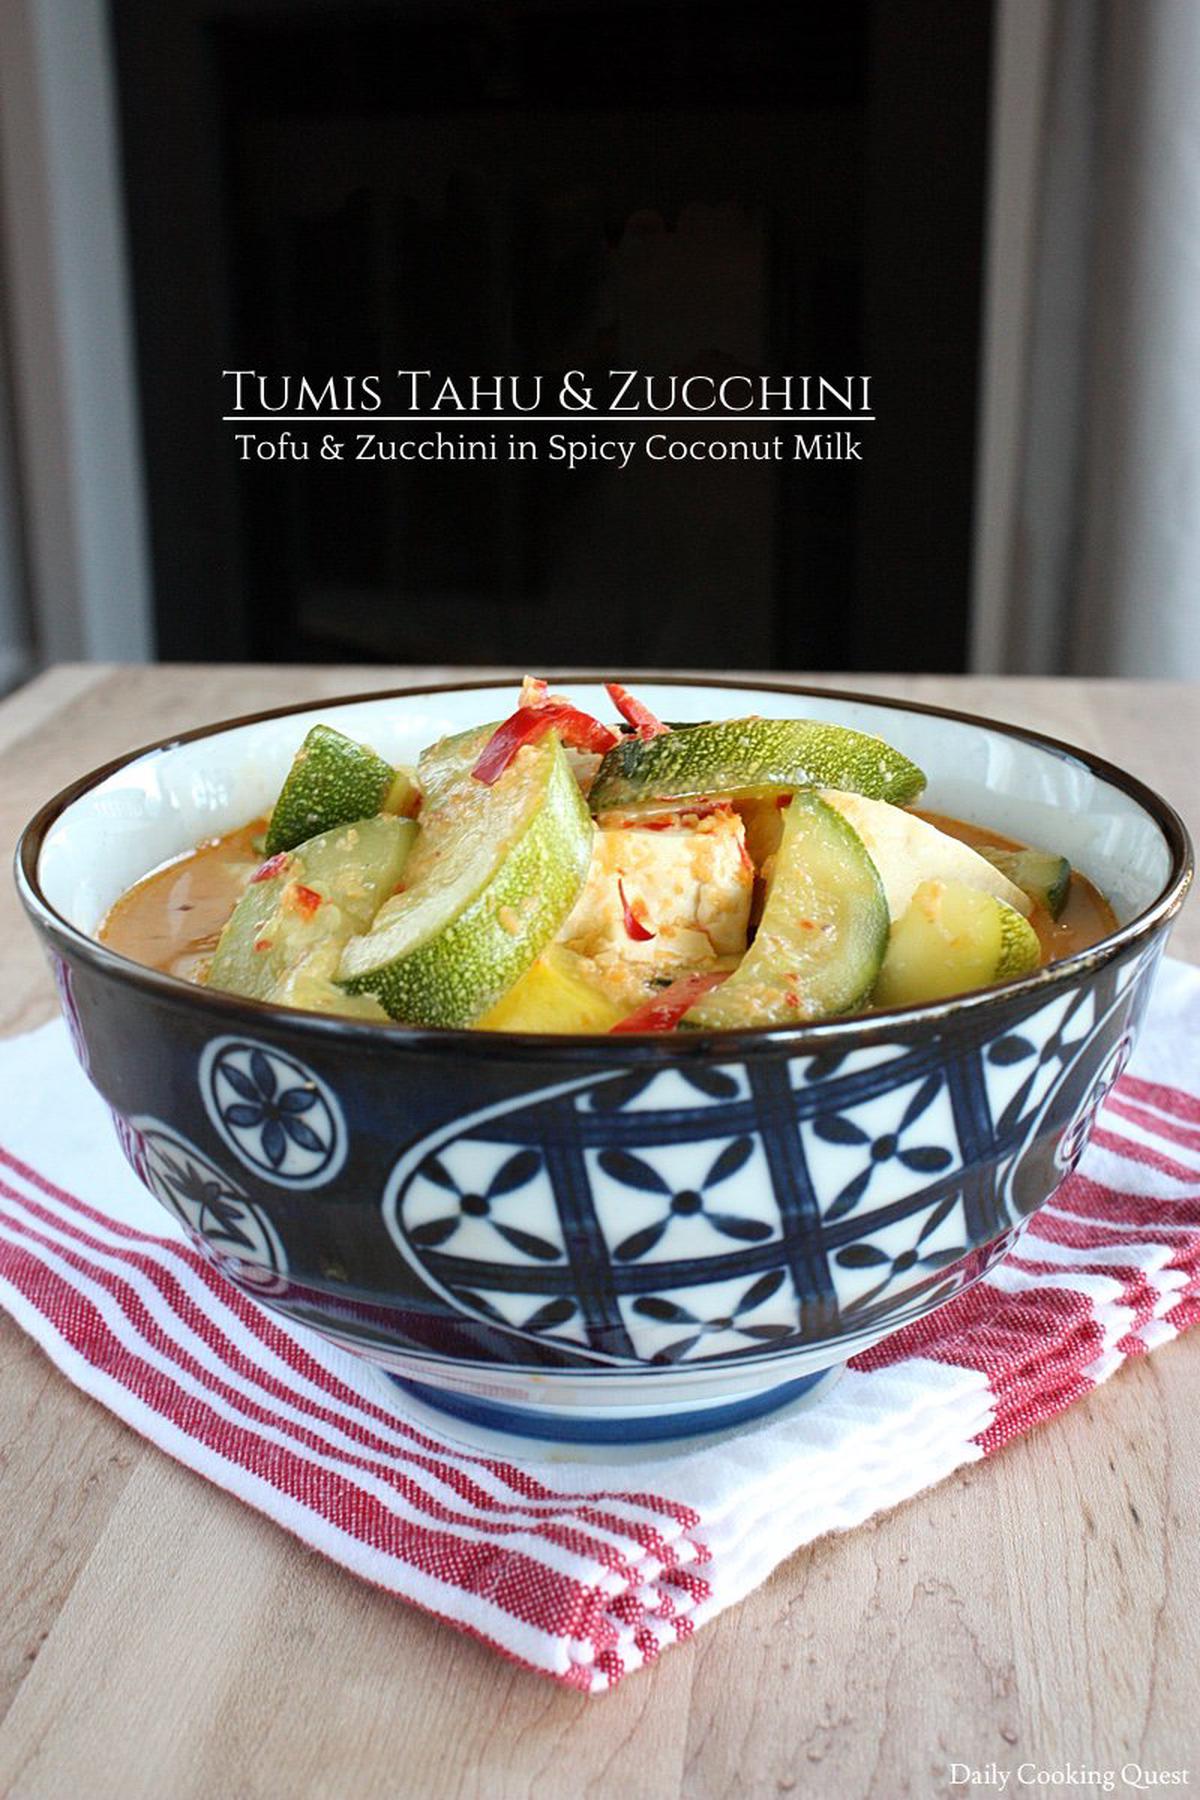 Tumis Tahu & Zucchini - Tofu and Zucchini in Spicy Coconut Milk